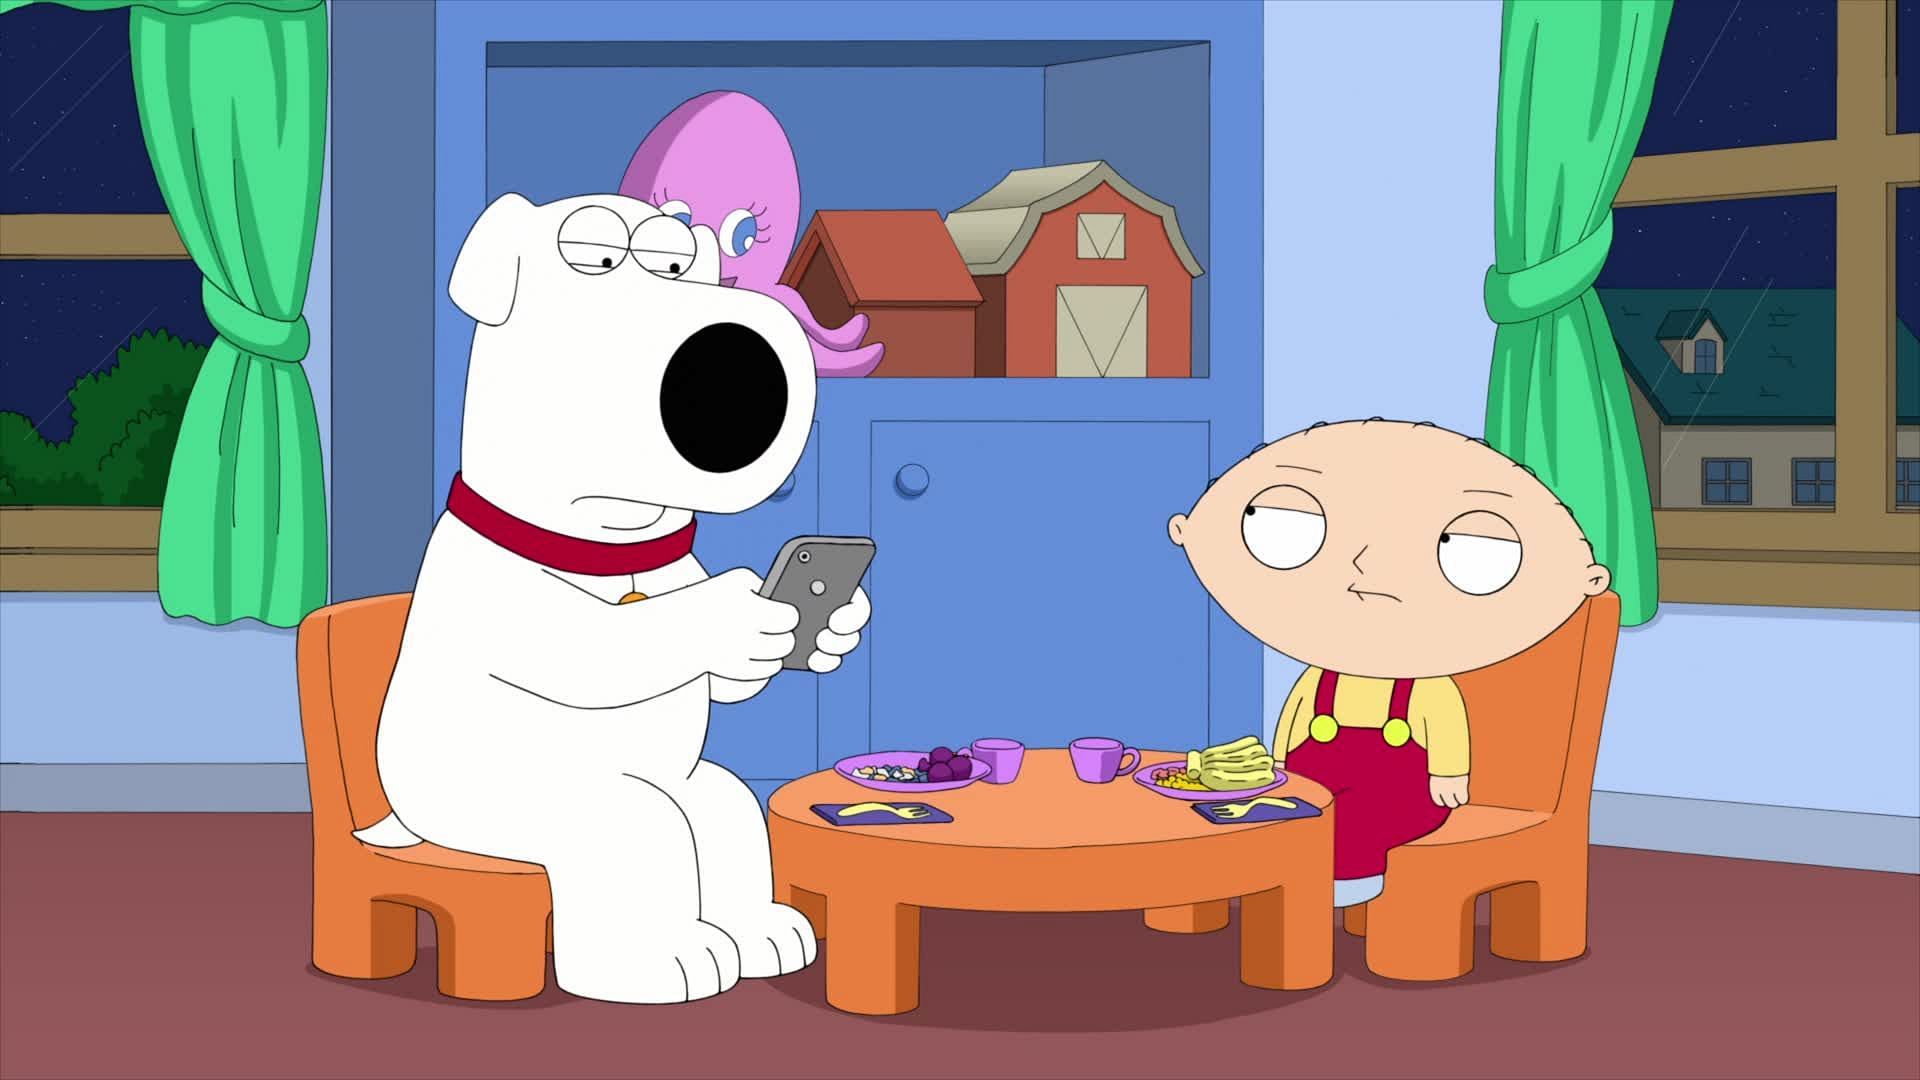 Family Guy season 22 episode 5 is available on Fox. (Image via Fox)